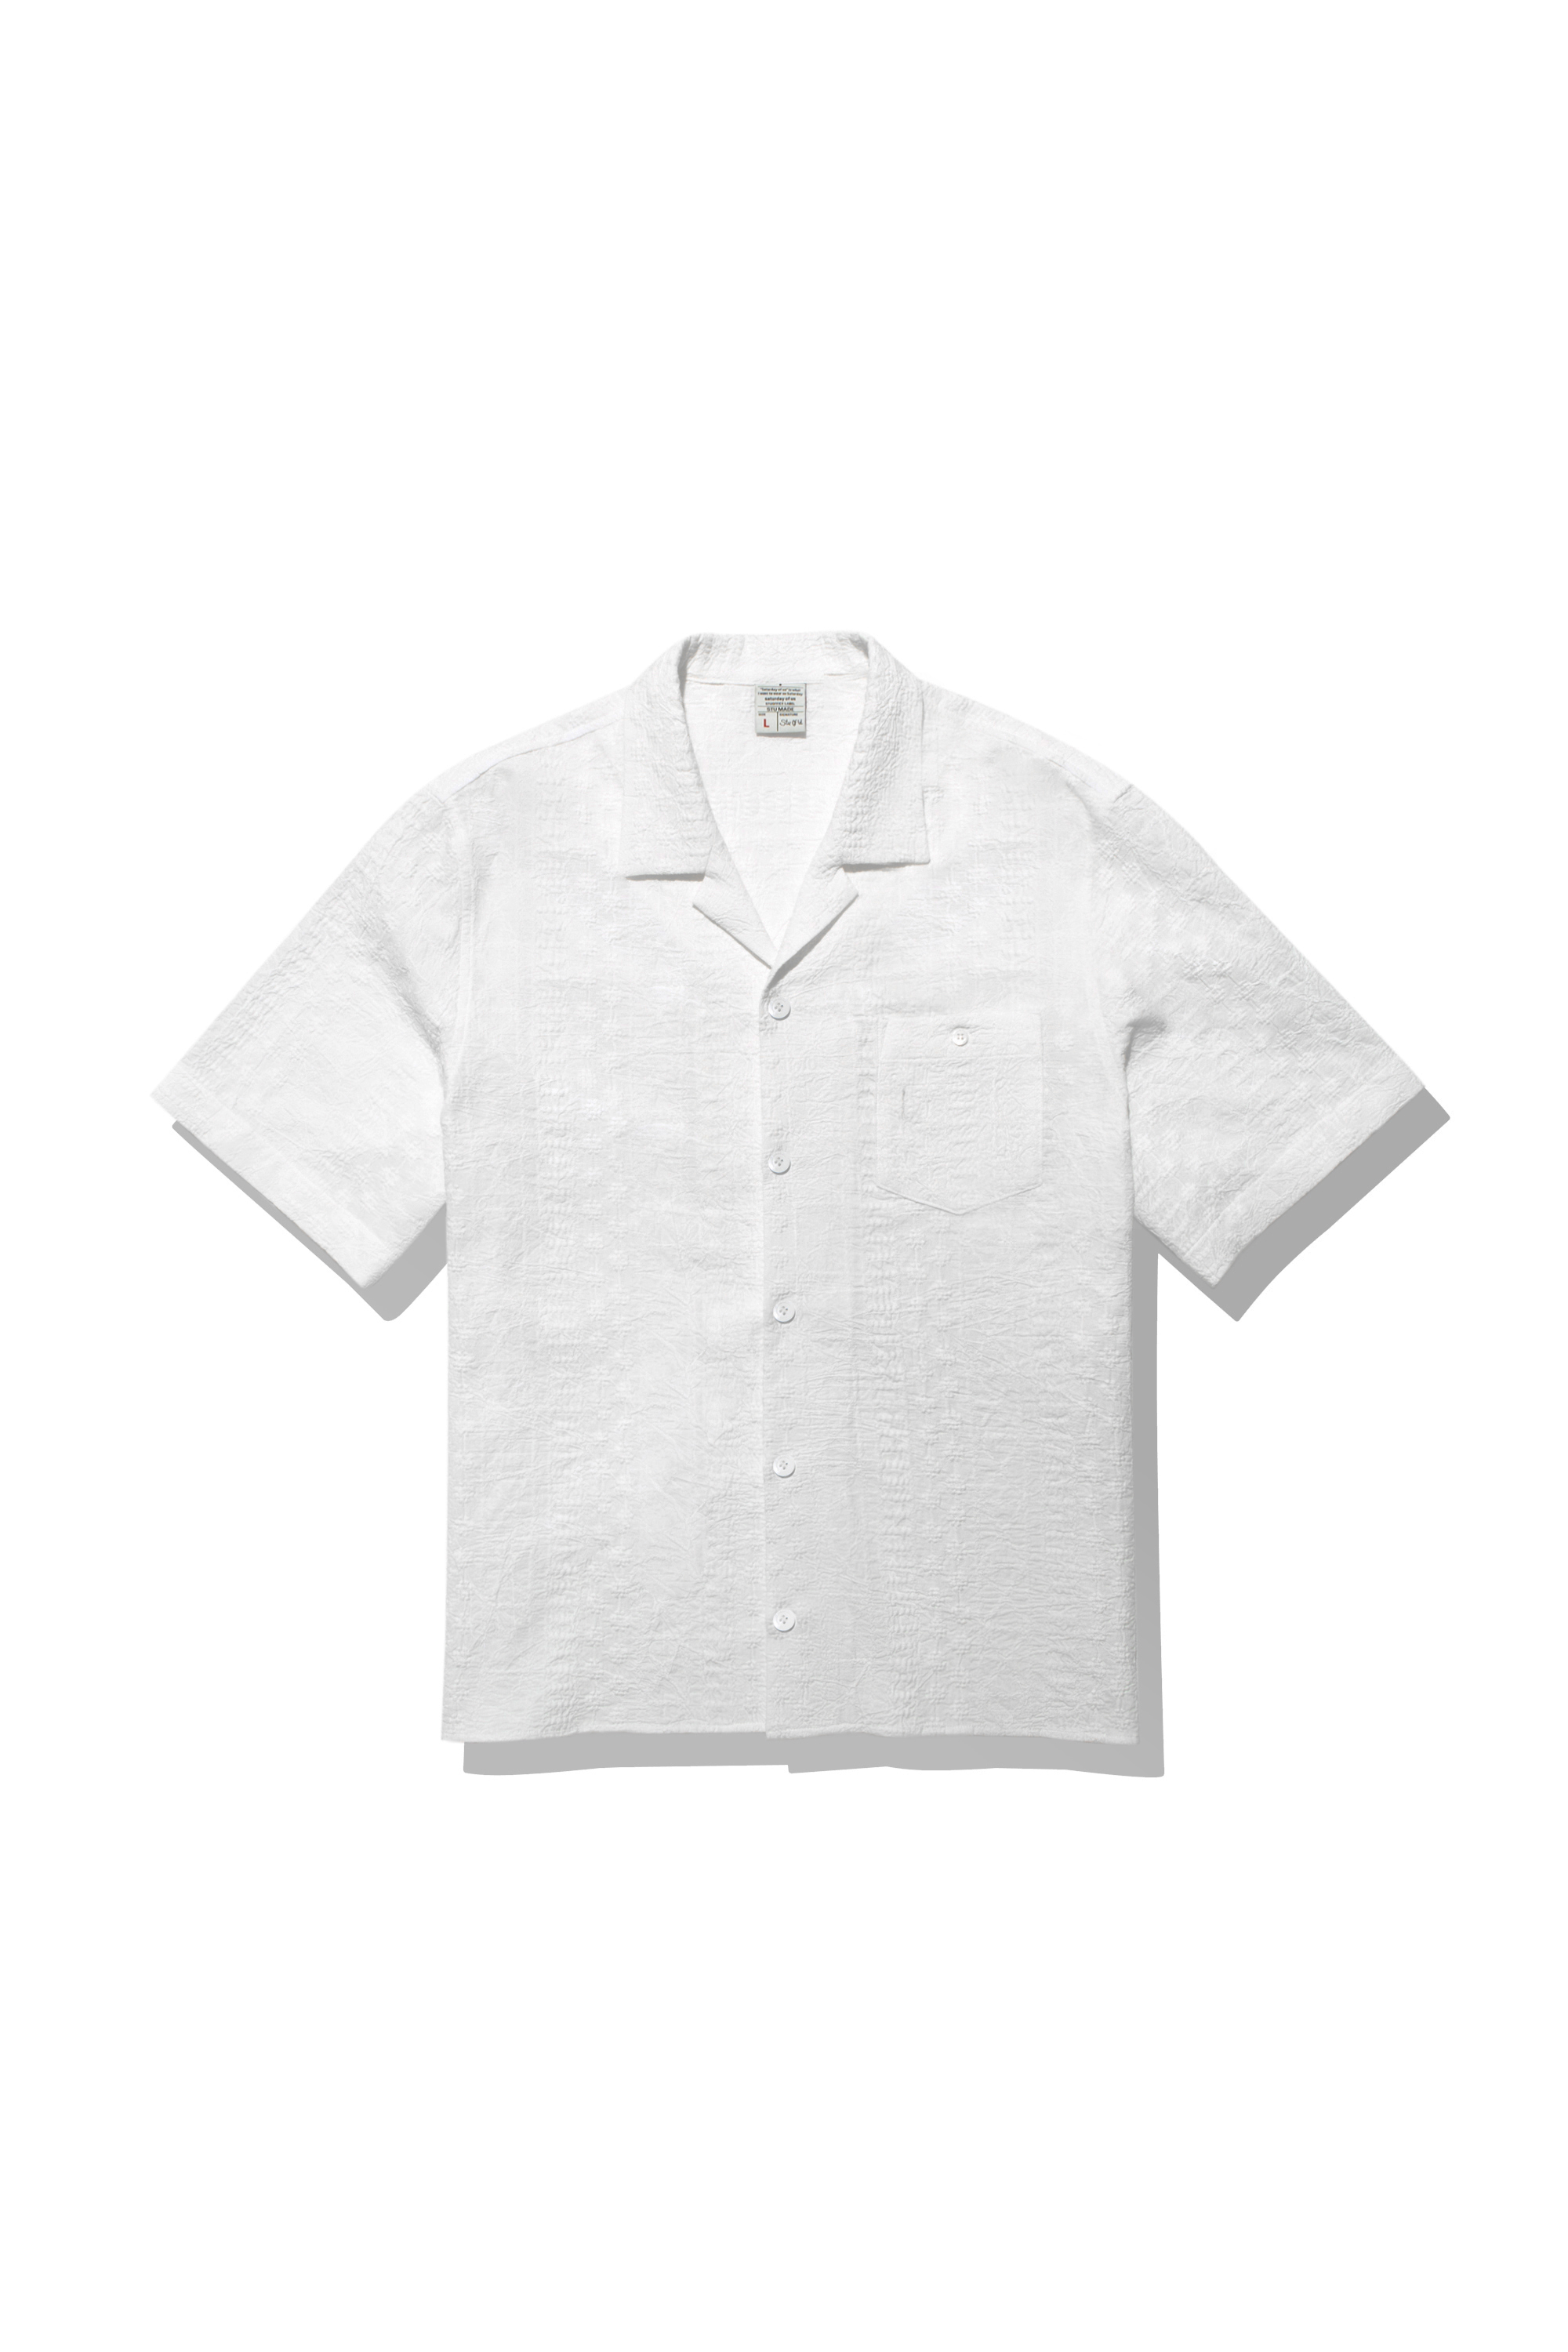 Embroidery Flower Shirt White(6월 12일 순차 발송)